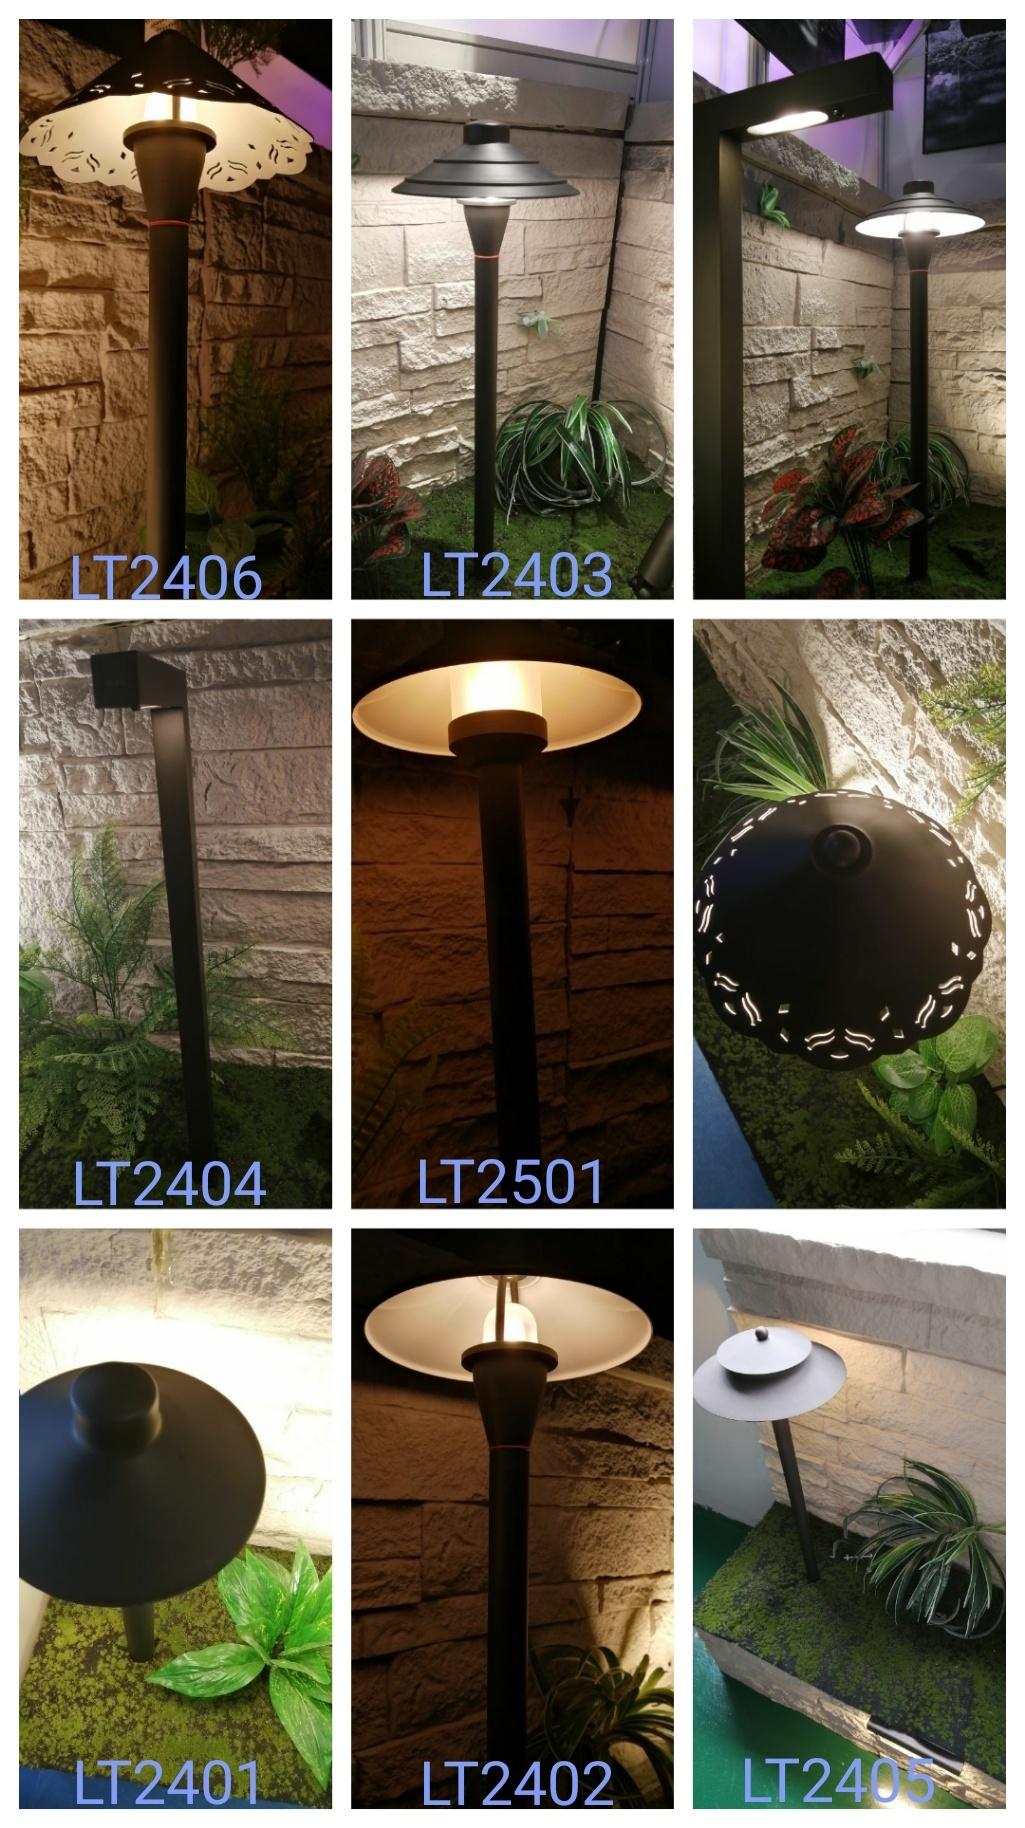 Lt2402 Low Voltage Landscape Lighting Brass Die Cast Brass Outdoor Pathway Light G4 LED Bulb for Walkway Lawn-Antique Bronze